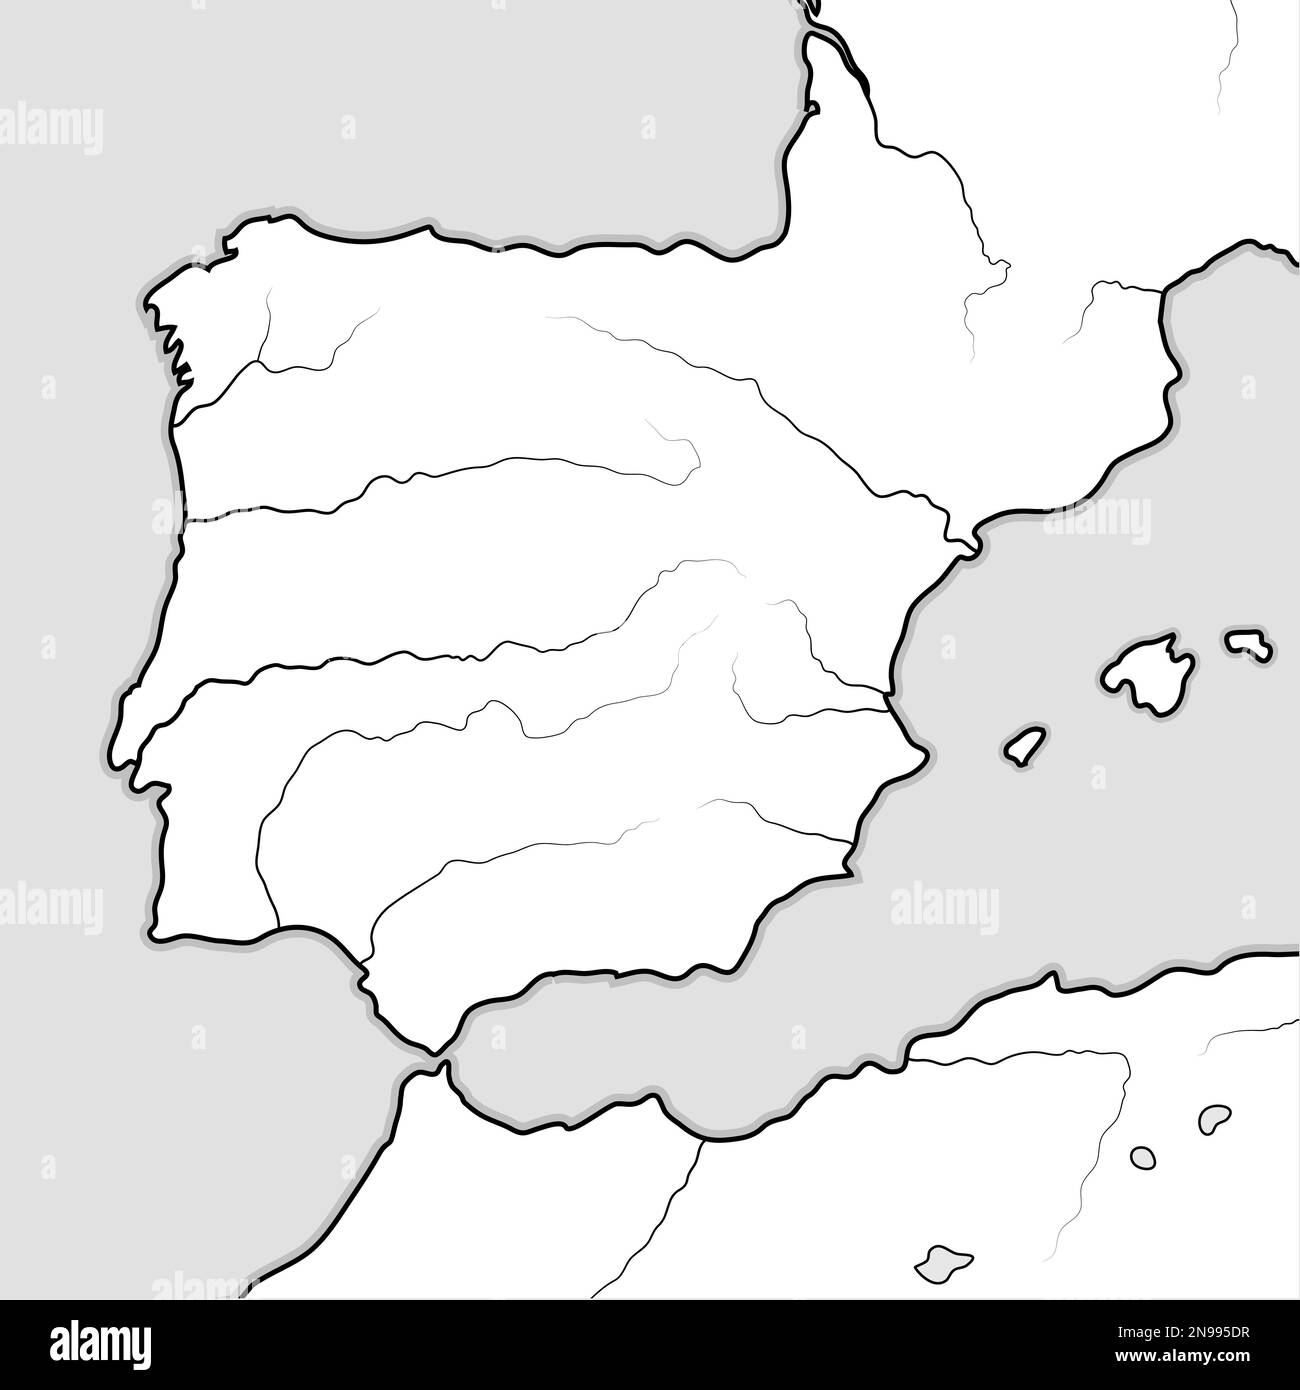 Map of The SPANISH Lands: Spain, Portugal, Iberia, Galicia, Catalonia, Valencia, Andalusia, Leon, Aragon & Castilla, Navarra, Asturias, Basque Stock Photo